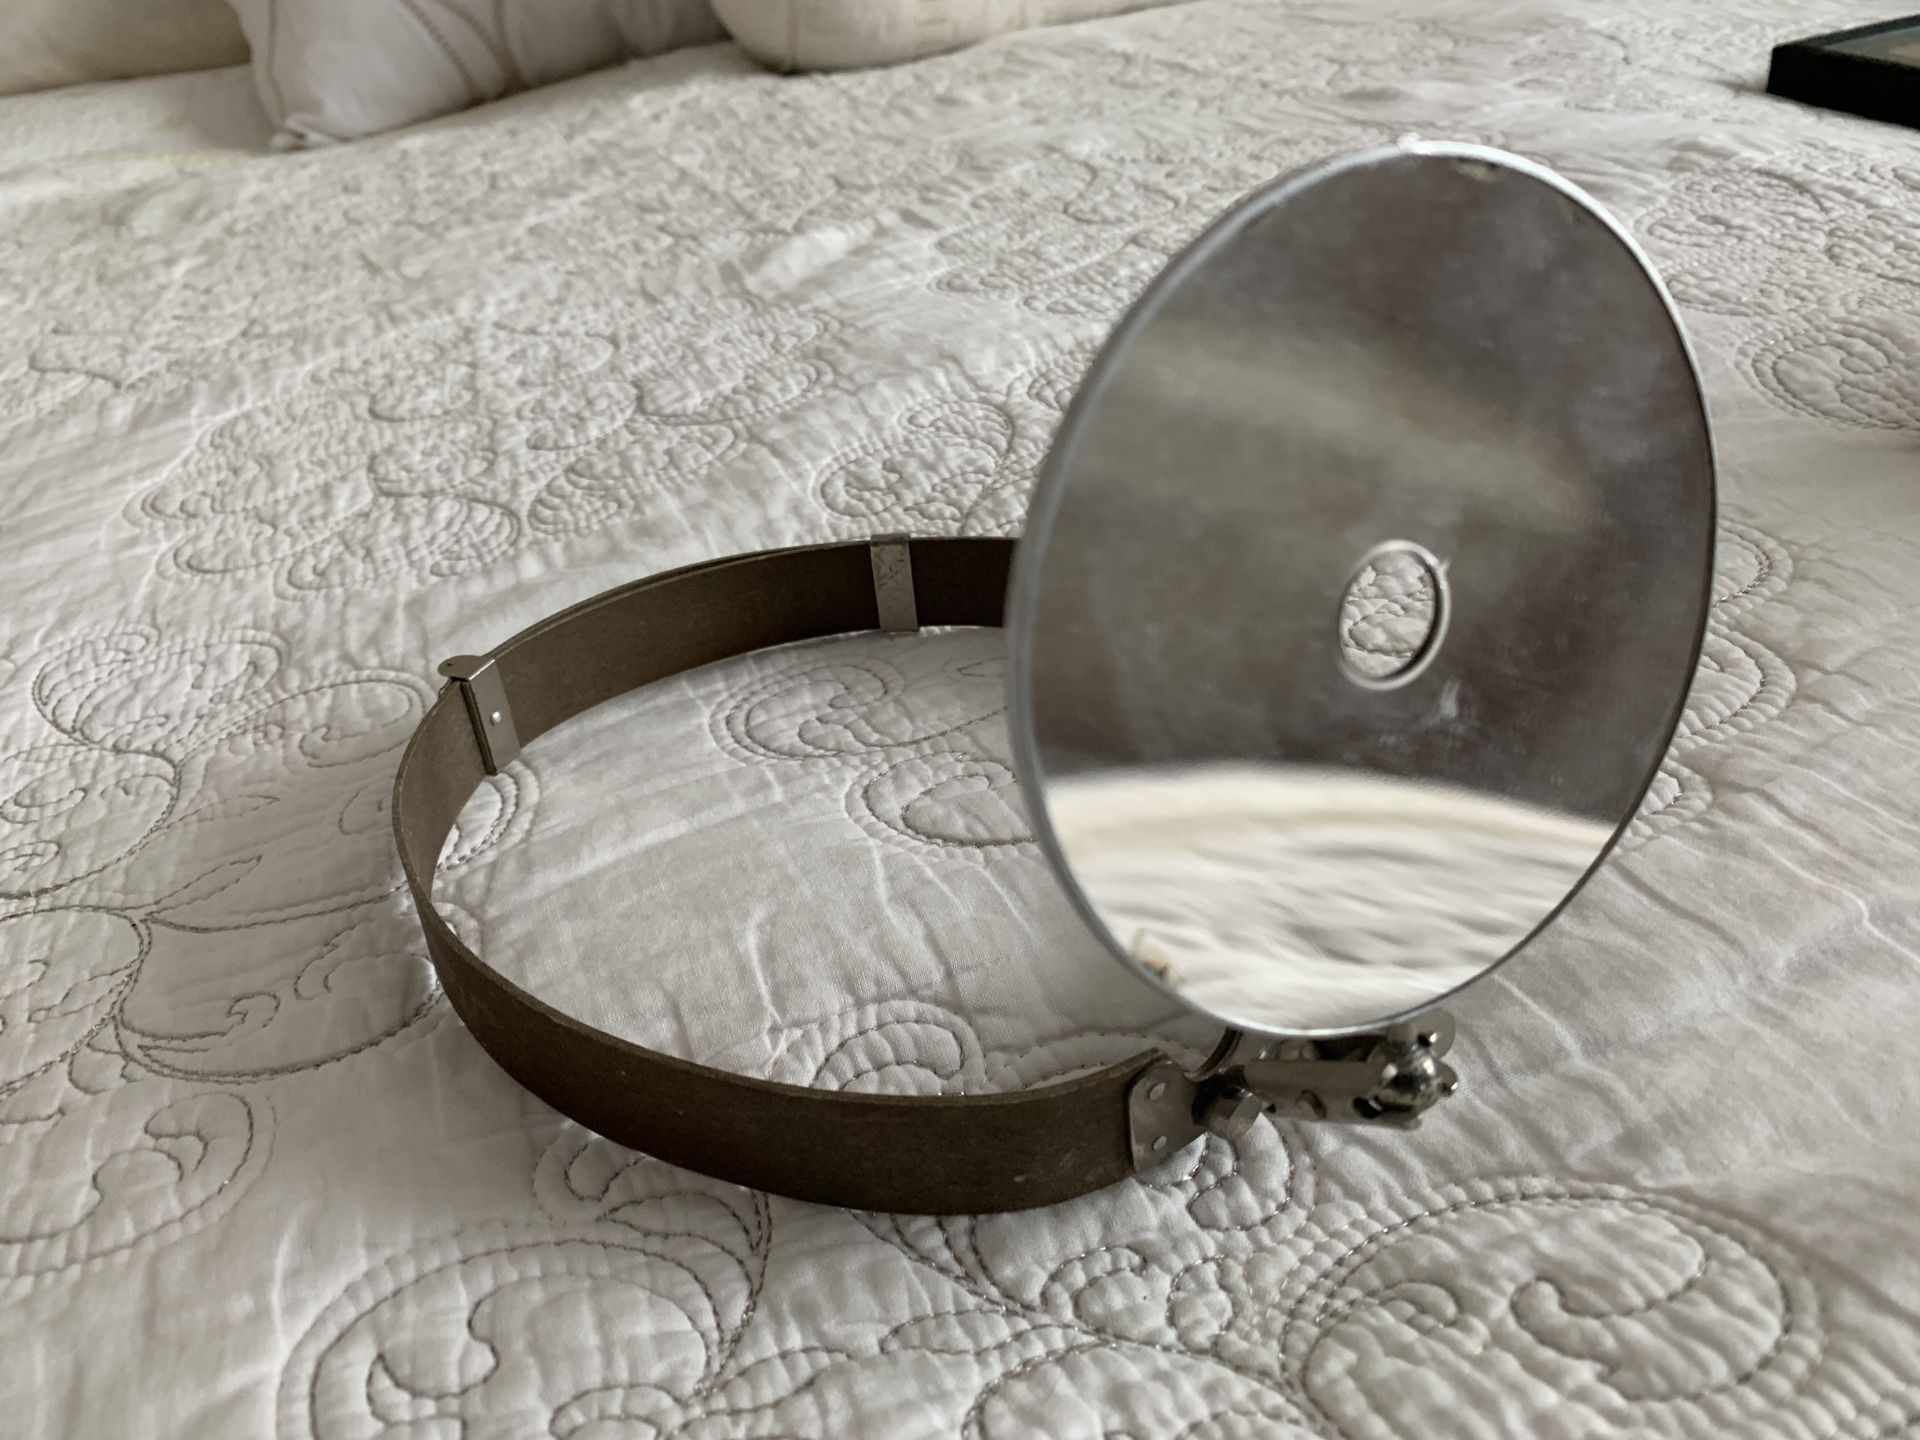 Vintage medical headband mirror for otolaryngologists.